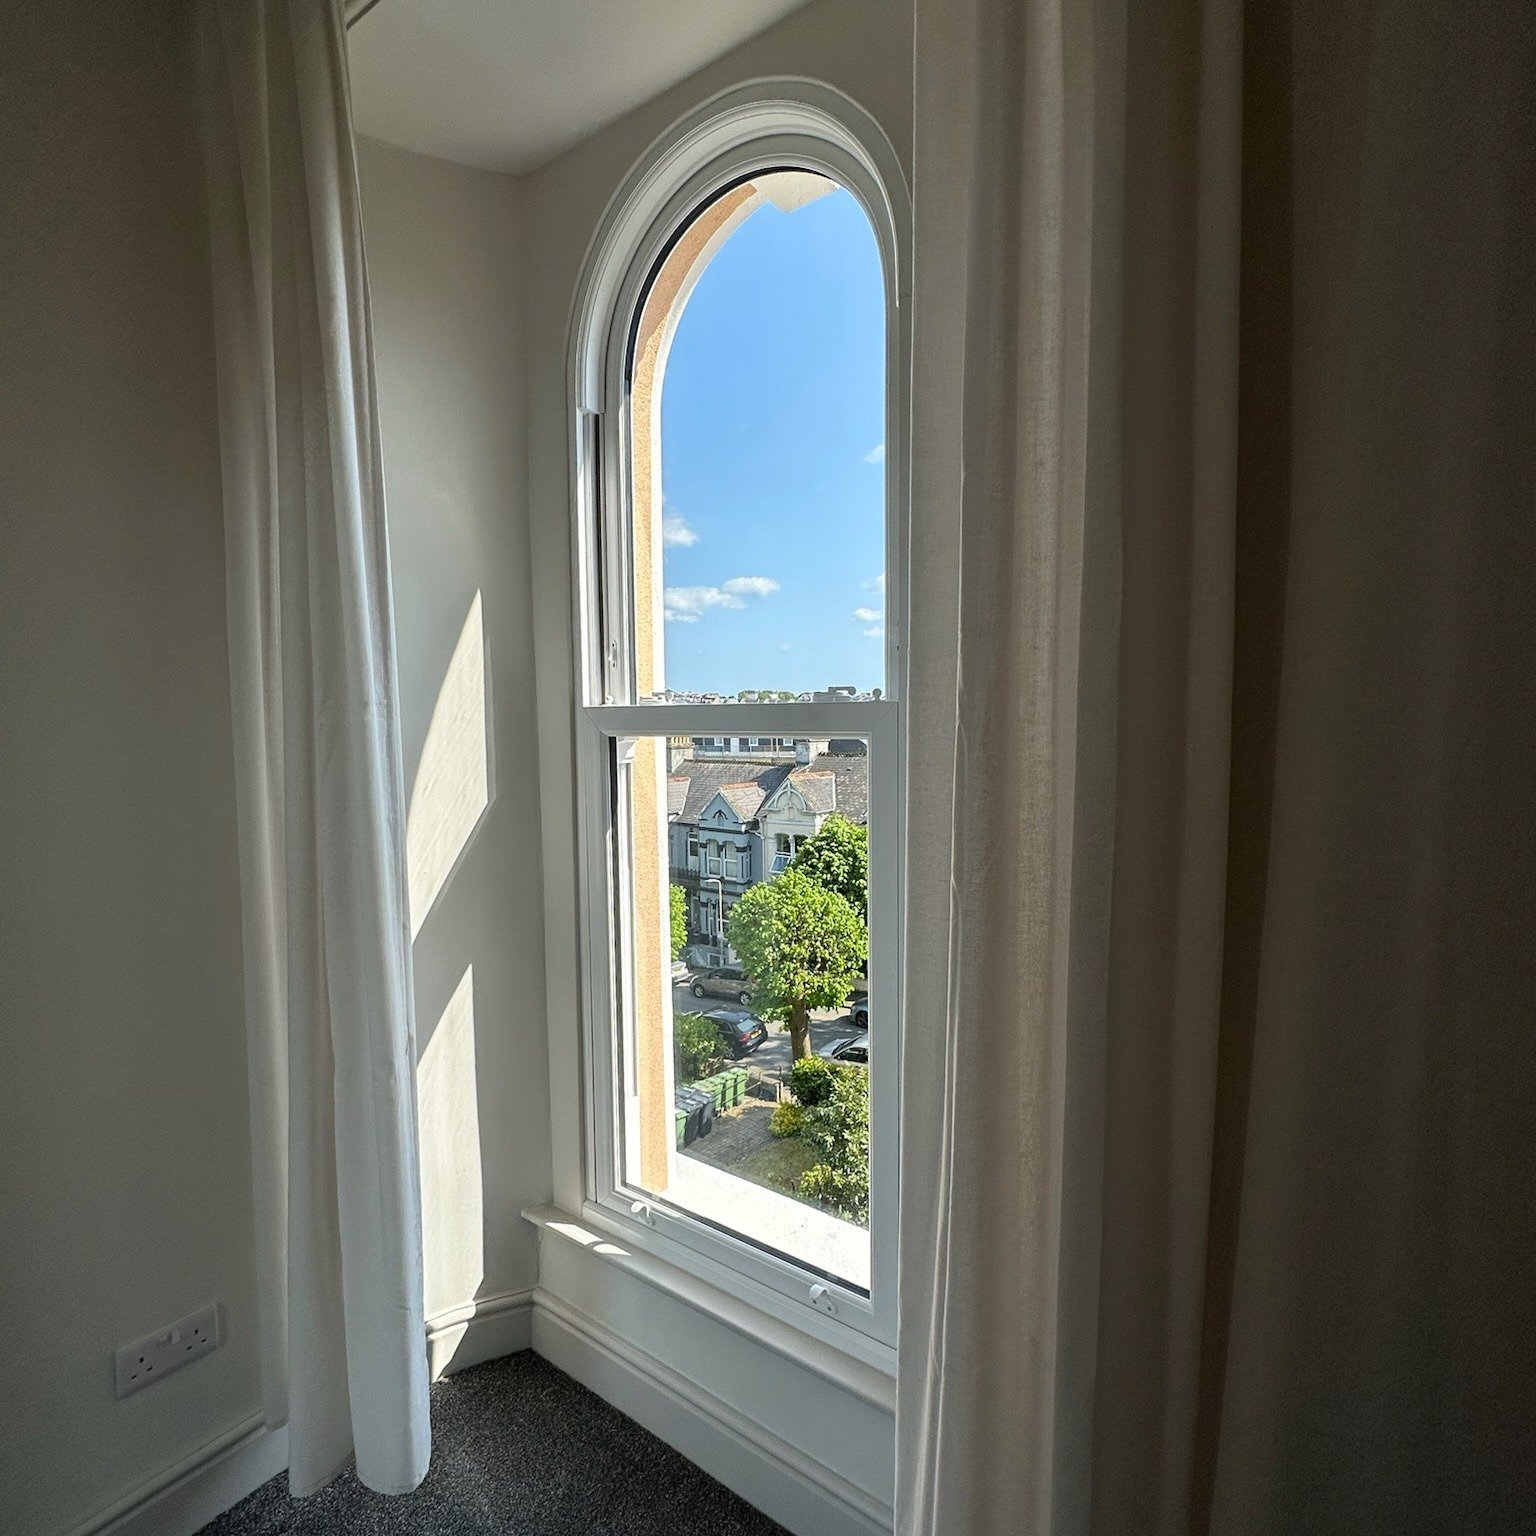 Rooms with a view.

 #HomeDecor #LuxuryLiving #UKRentals #LettingsAgent #PropertyManagement #HomeRentals #RealEstateUK #RentalProperty #lettingsagentuk #plymouthuk #interiordesigner #sharedliving